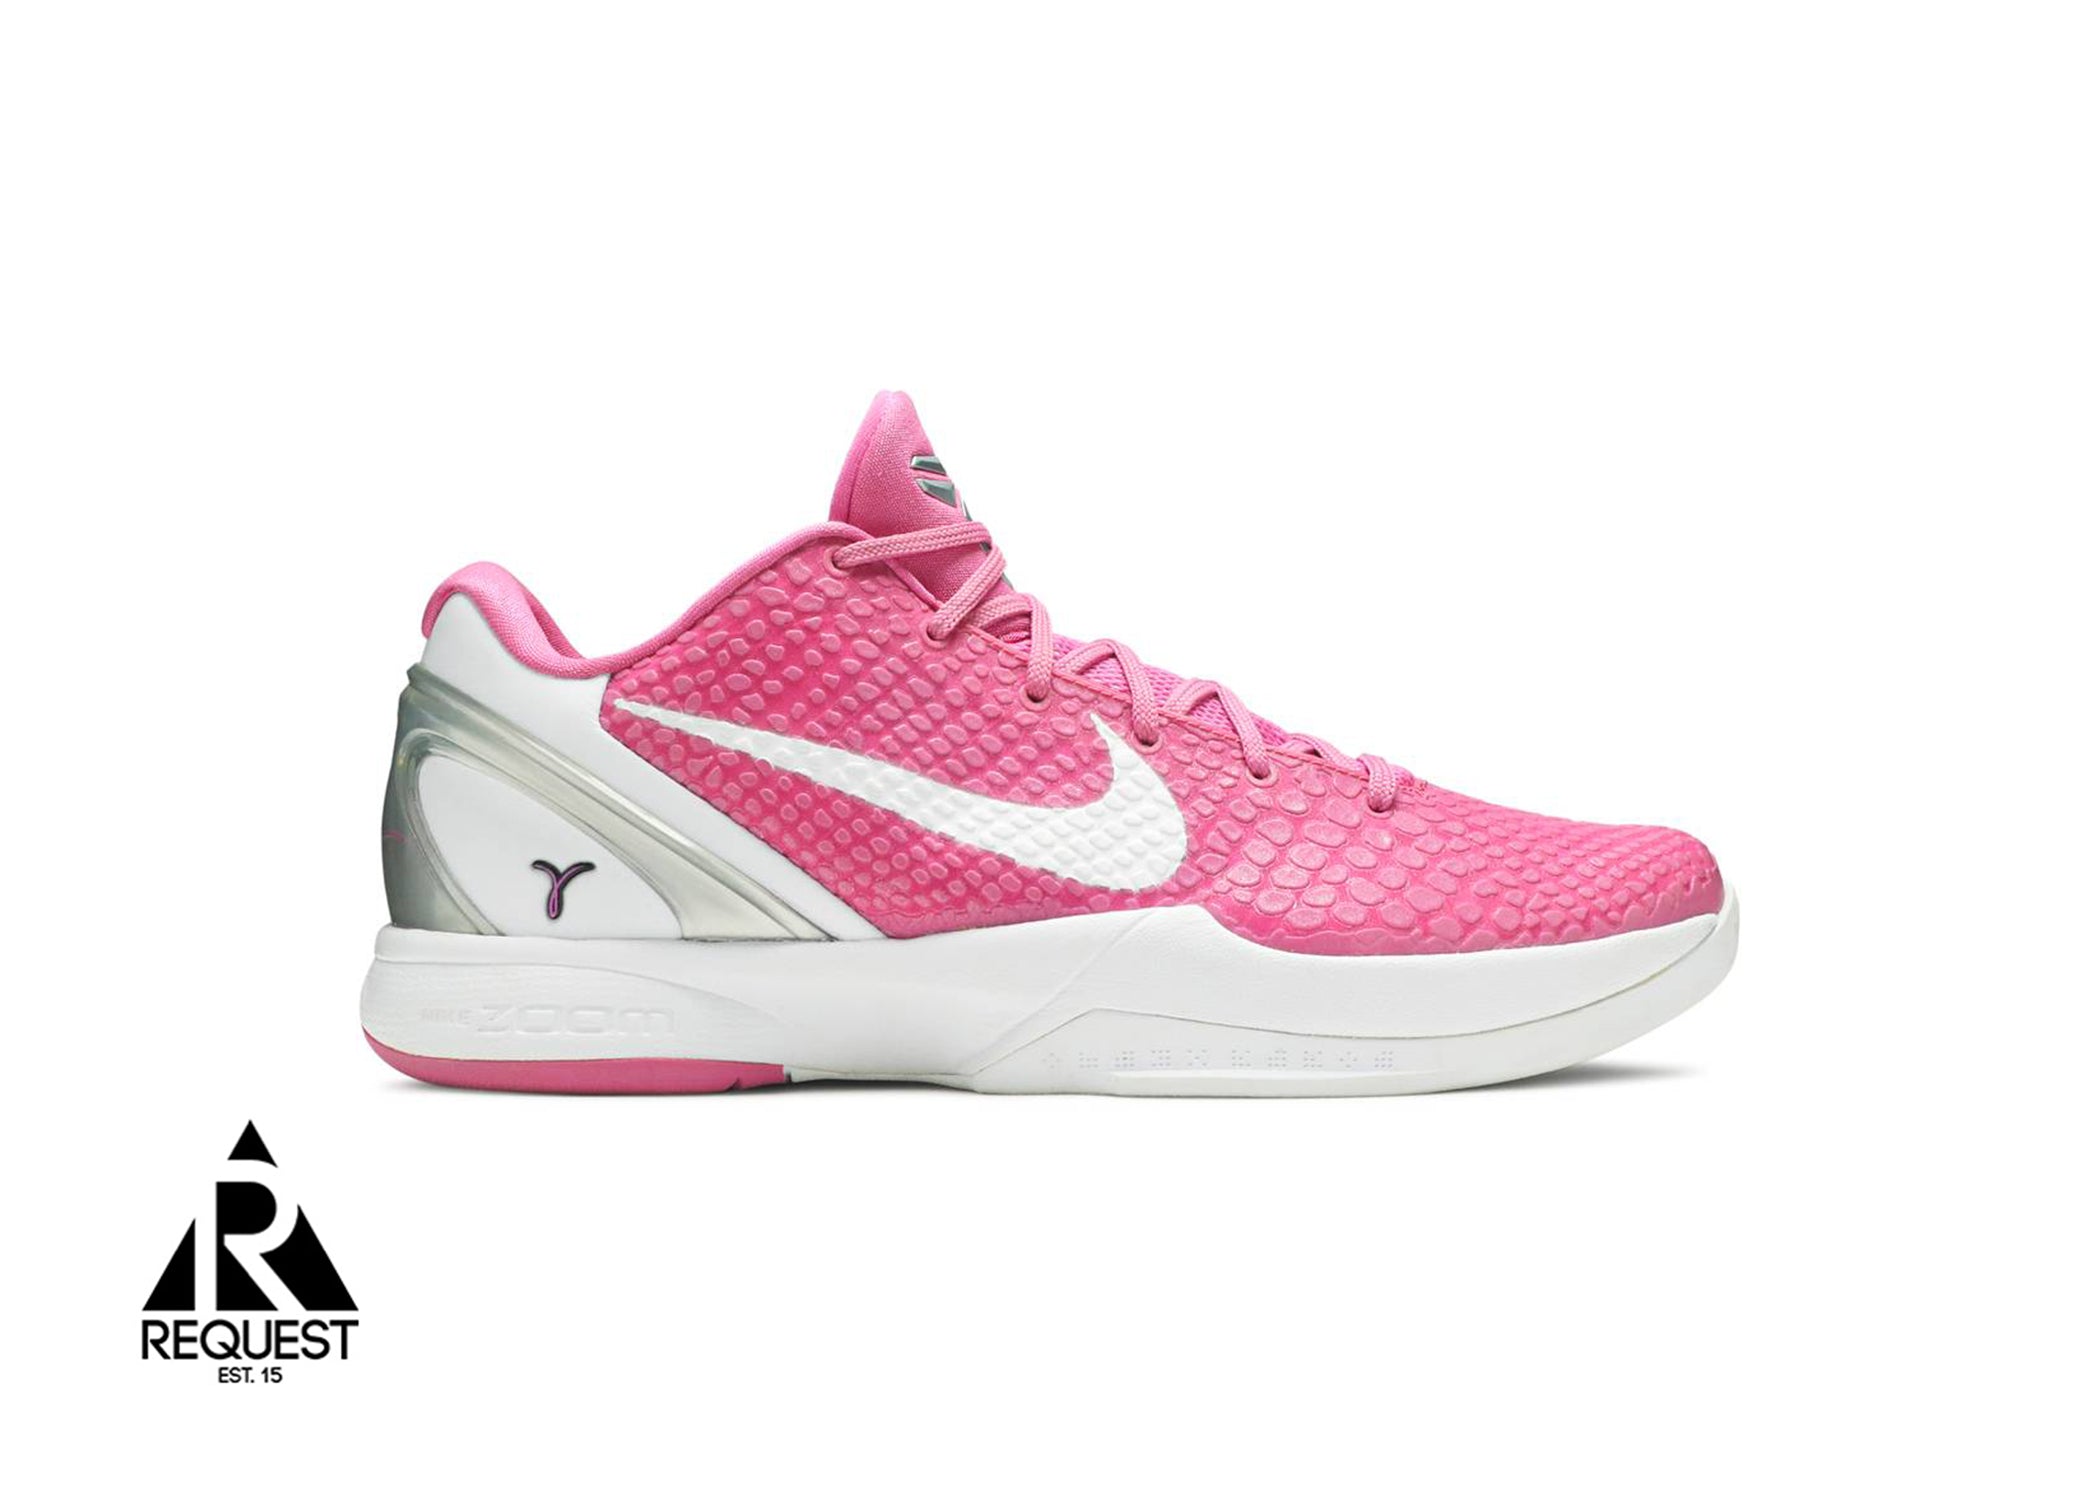 Nike Zoom Kobe VI “Kay Yow Think Pink”